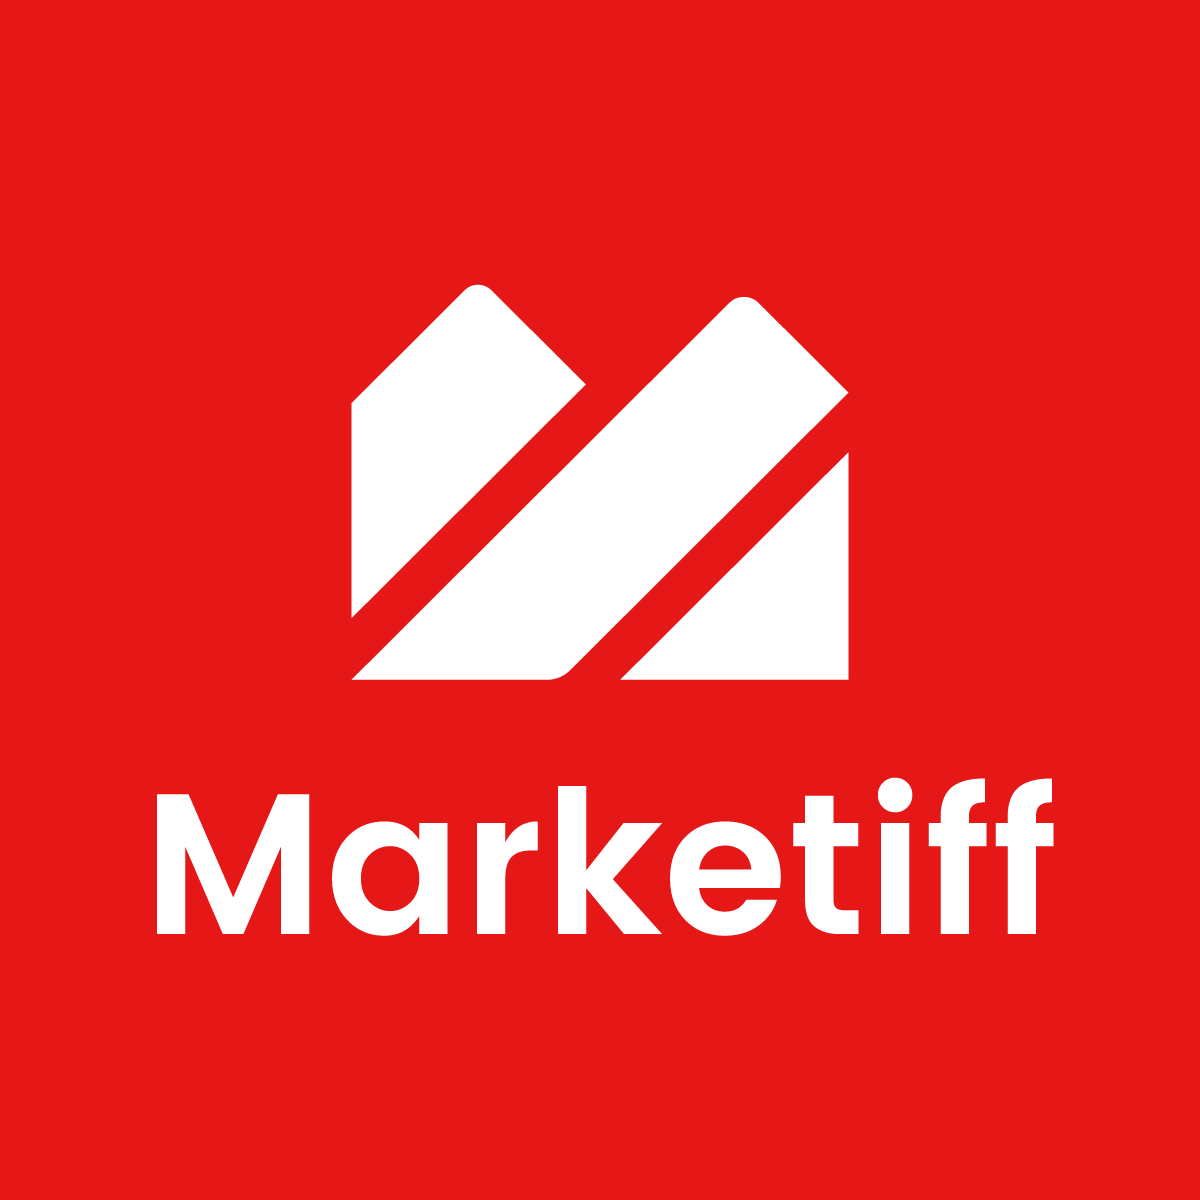 Marketiff